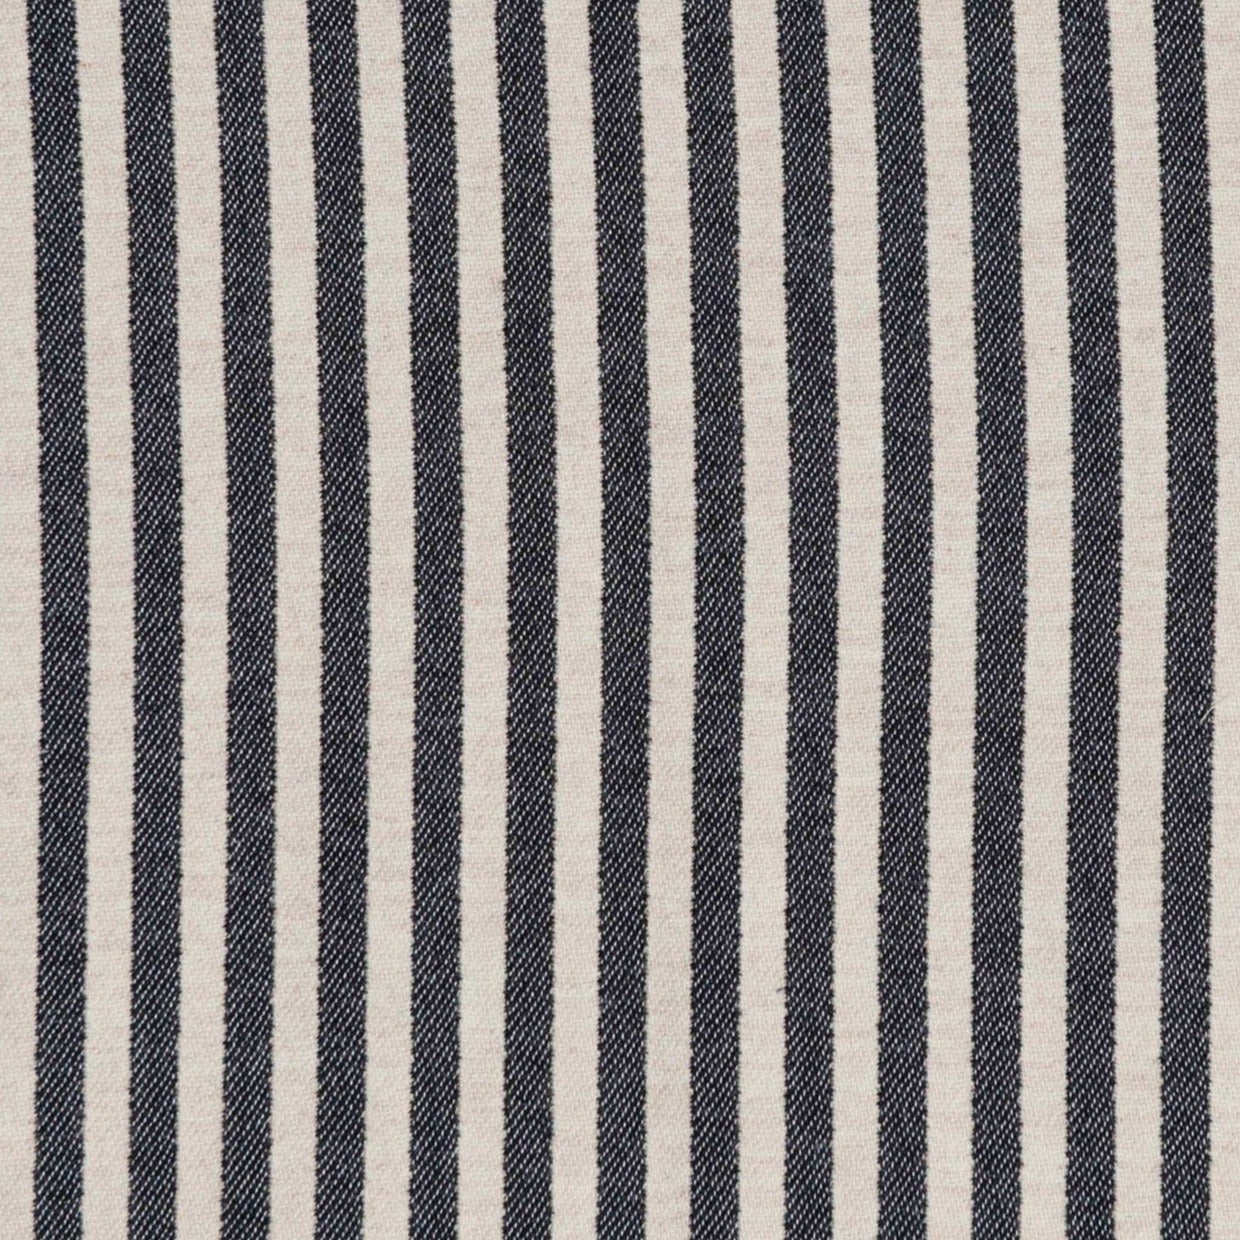 Harbour Stripe Merino Wool Fabric Black and Ecru sample